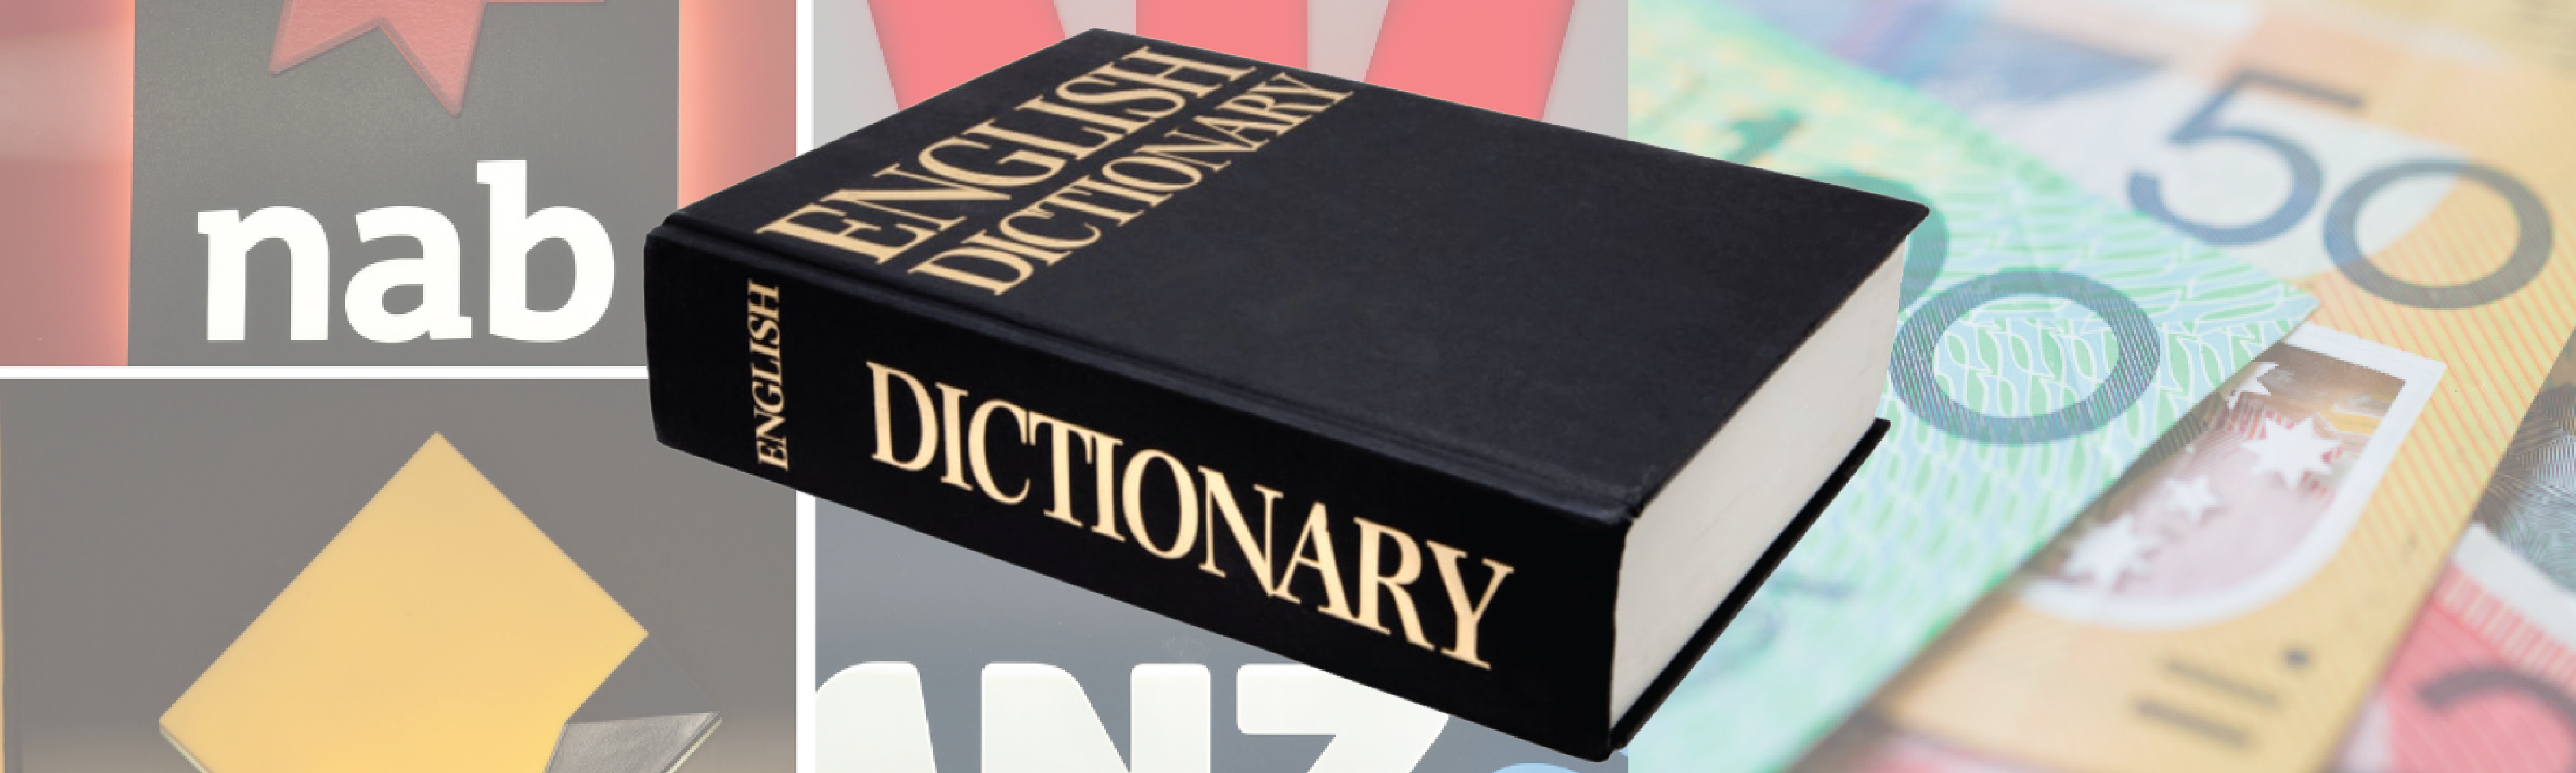 Home Loan Dictionary